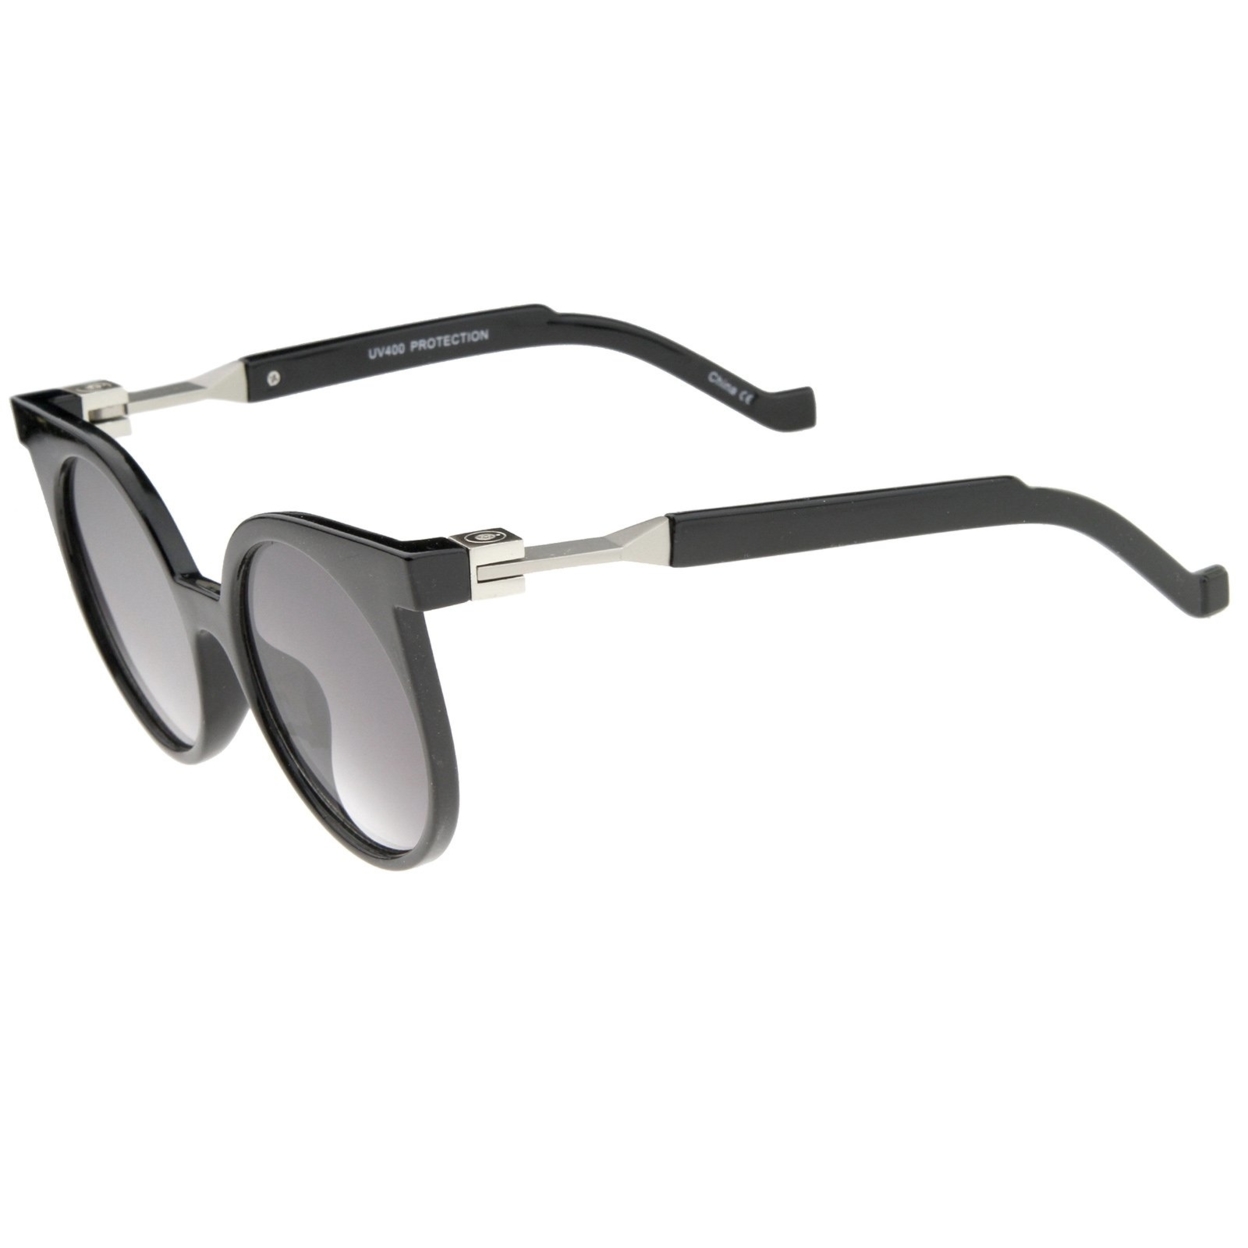 Modern Horn Rimmed Neutral-Colored Flat Lens Round Sunglasses 50mm - Shiny Black / Lavender